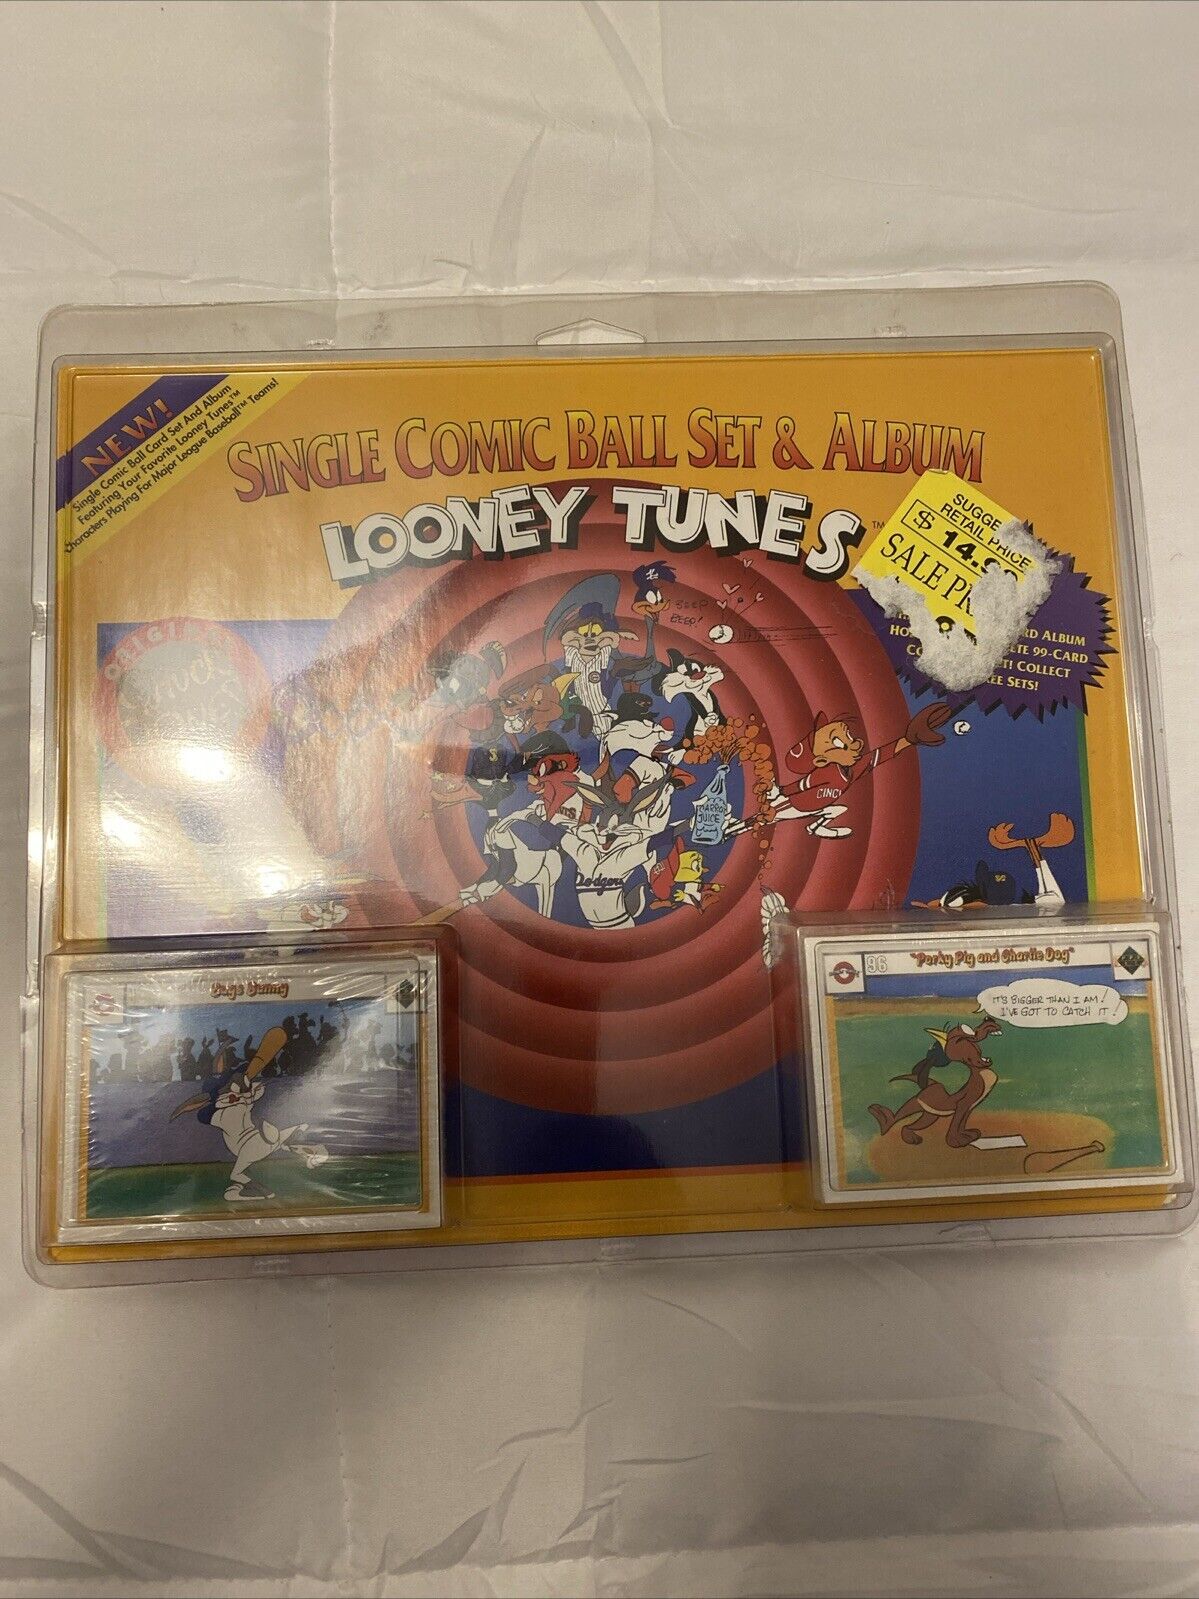 1991 Upper Deck Looney Tunes Single Comic Ball Set and Album 